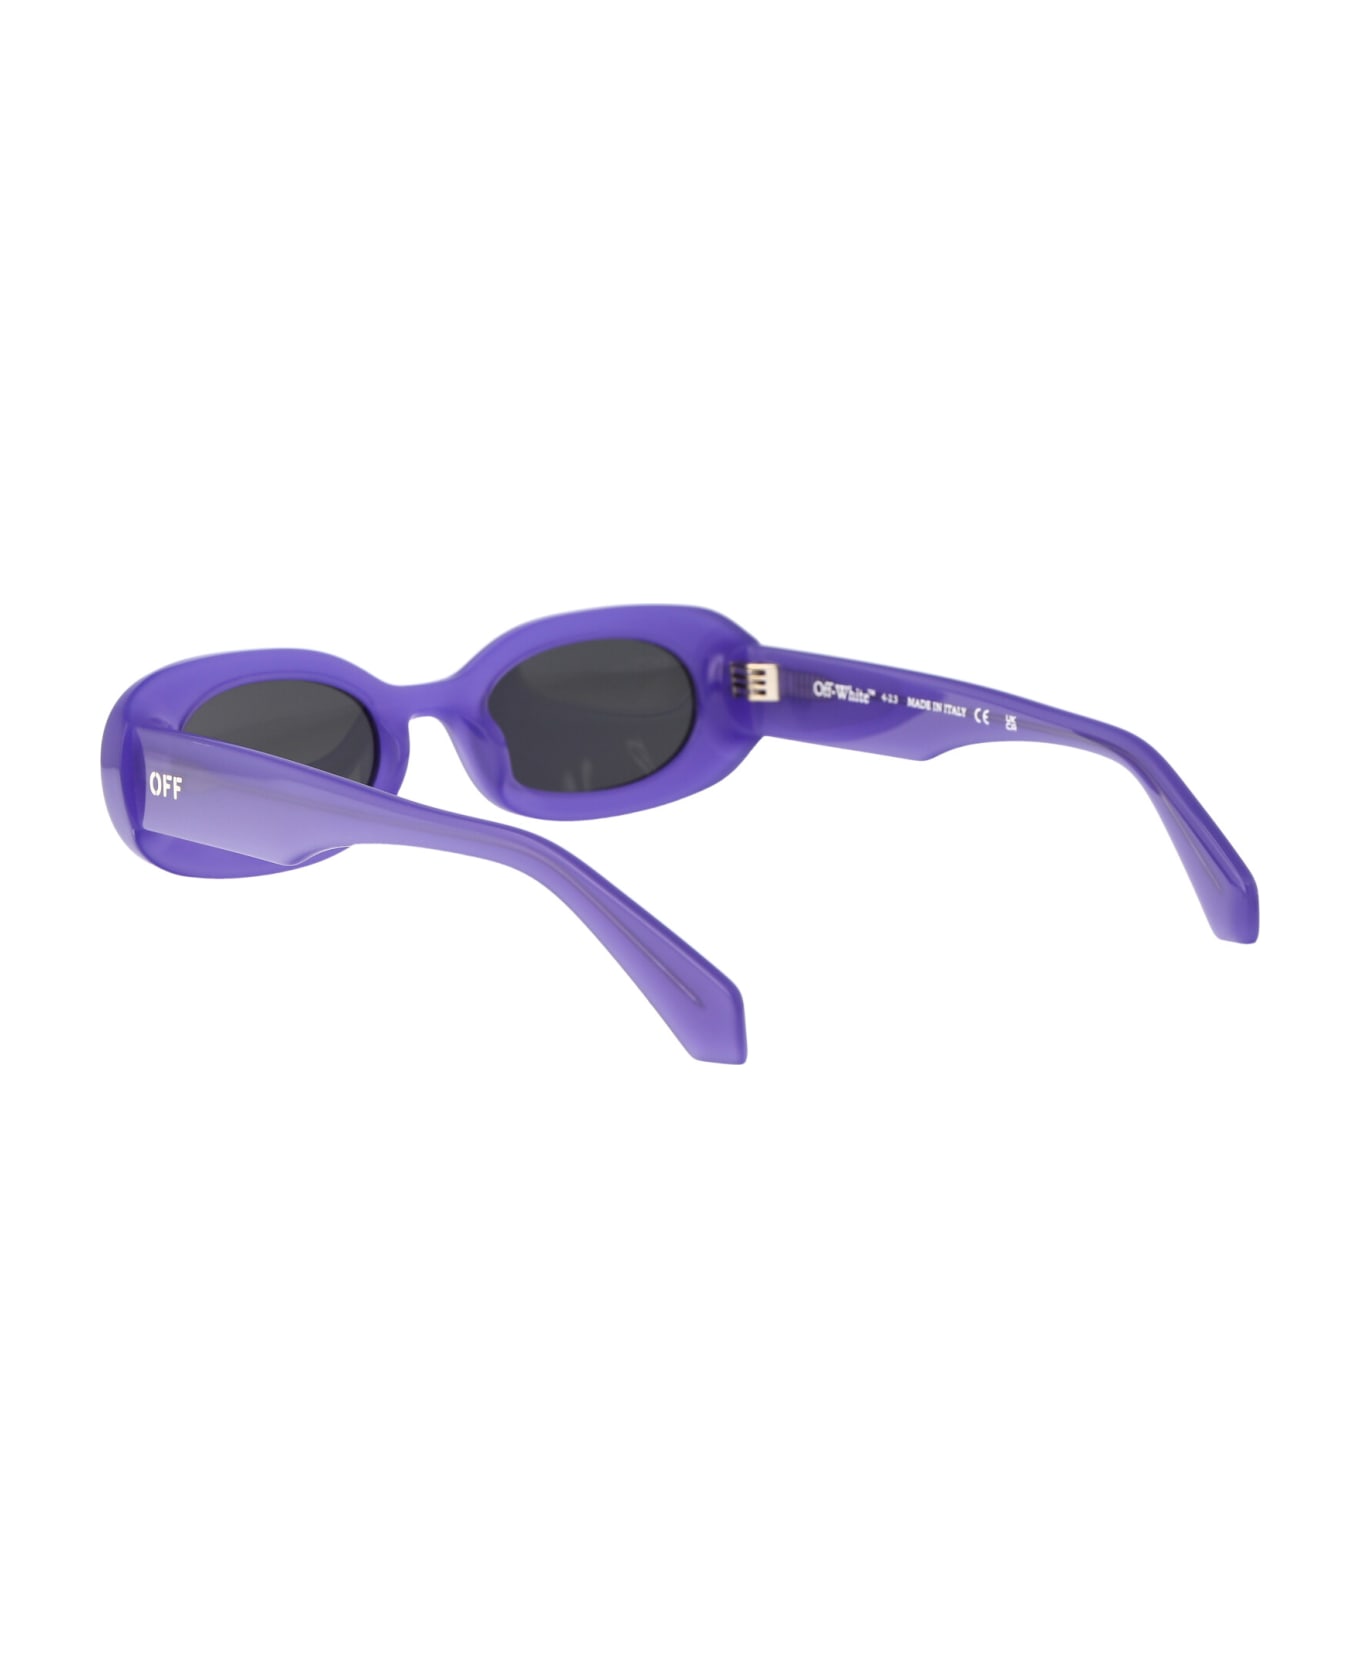 Off-White Amalfi Sunglasses - 3707 PURPLE サングラス